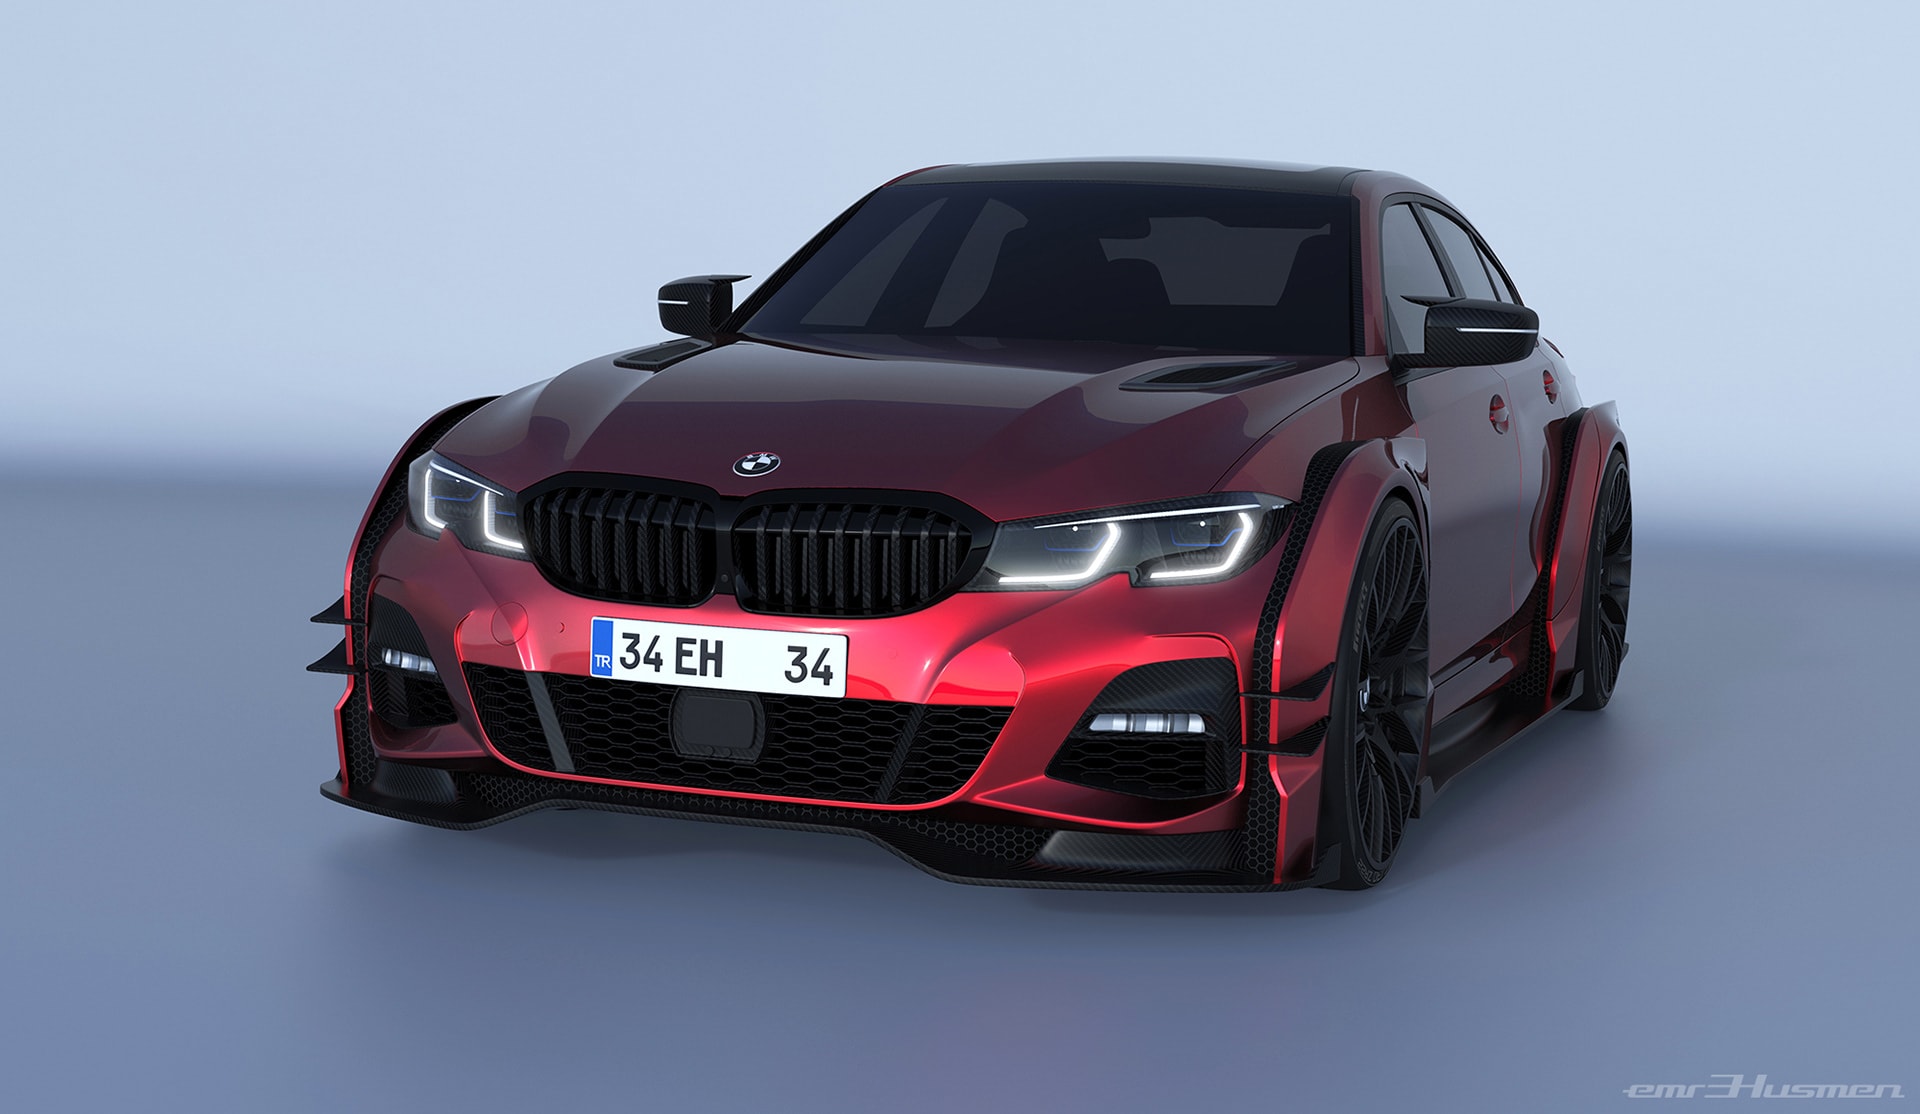 57 Top Images Bmw Sports Car 2020 - 2015 BMW i8 hybrid sports car details revealed - Car News ...